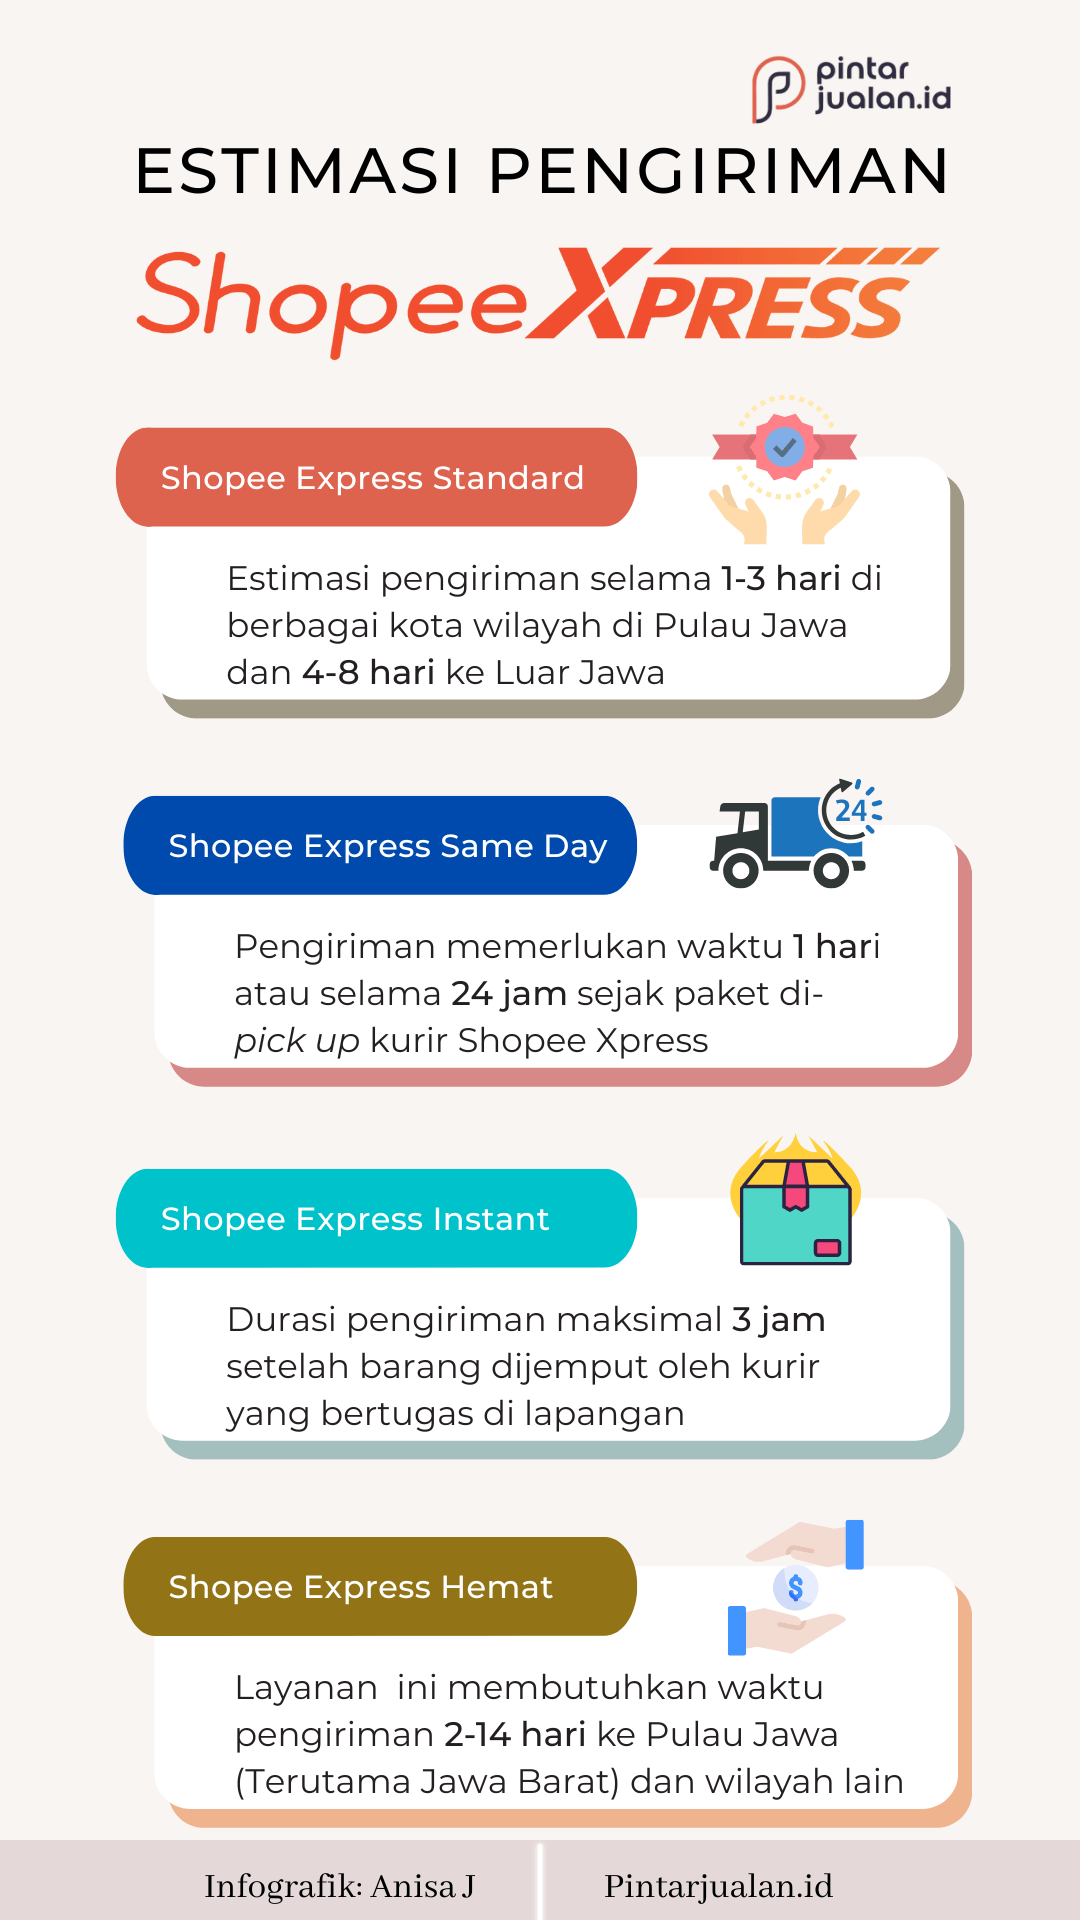 Berapa lama estimasi pengiriman shopee express